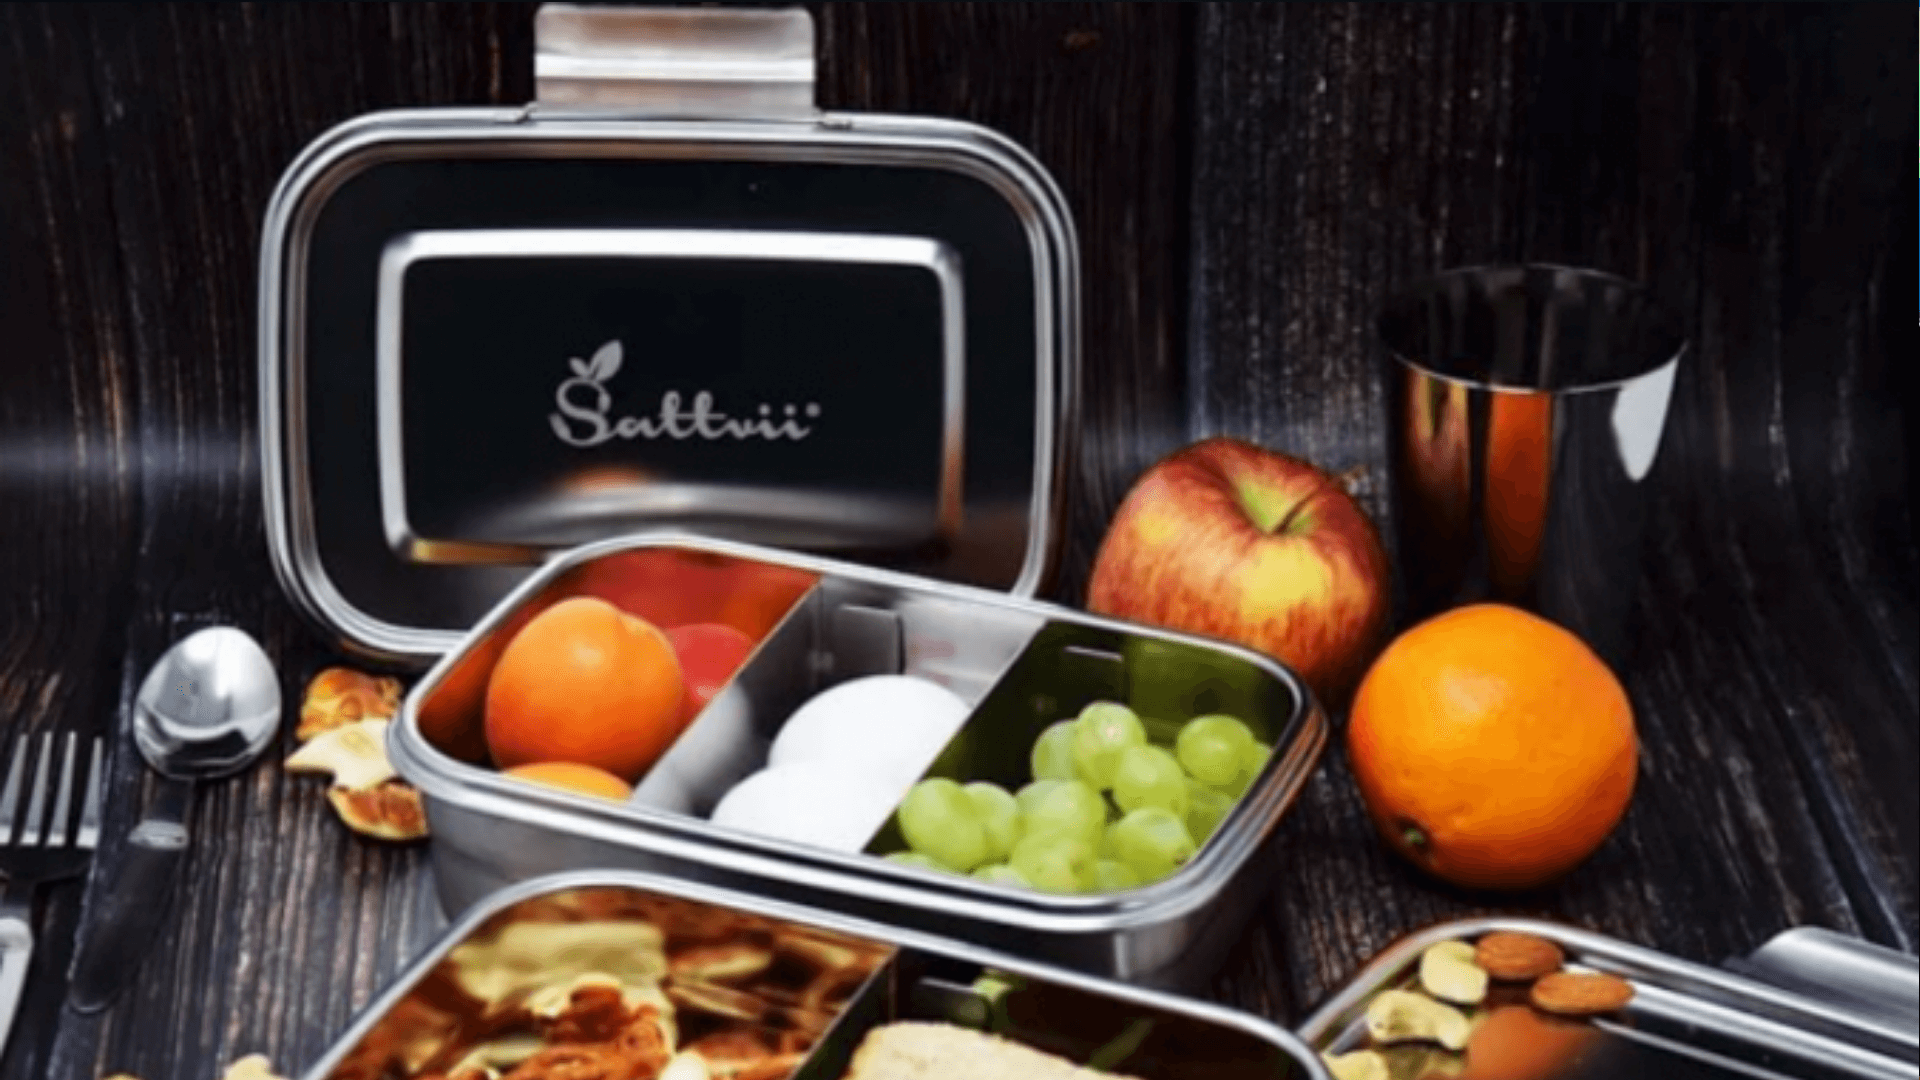 Sattvii - Sustainable stainless steel boxes